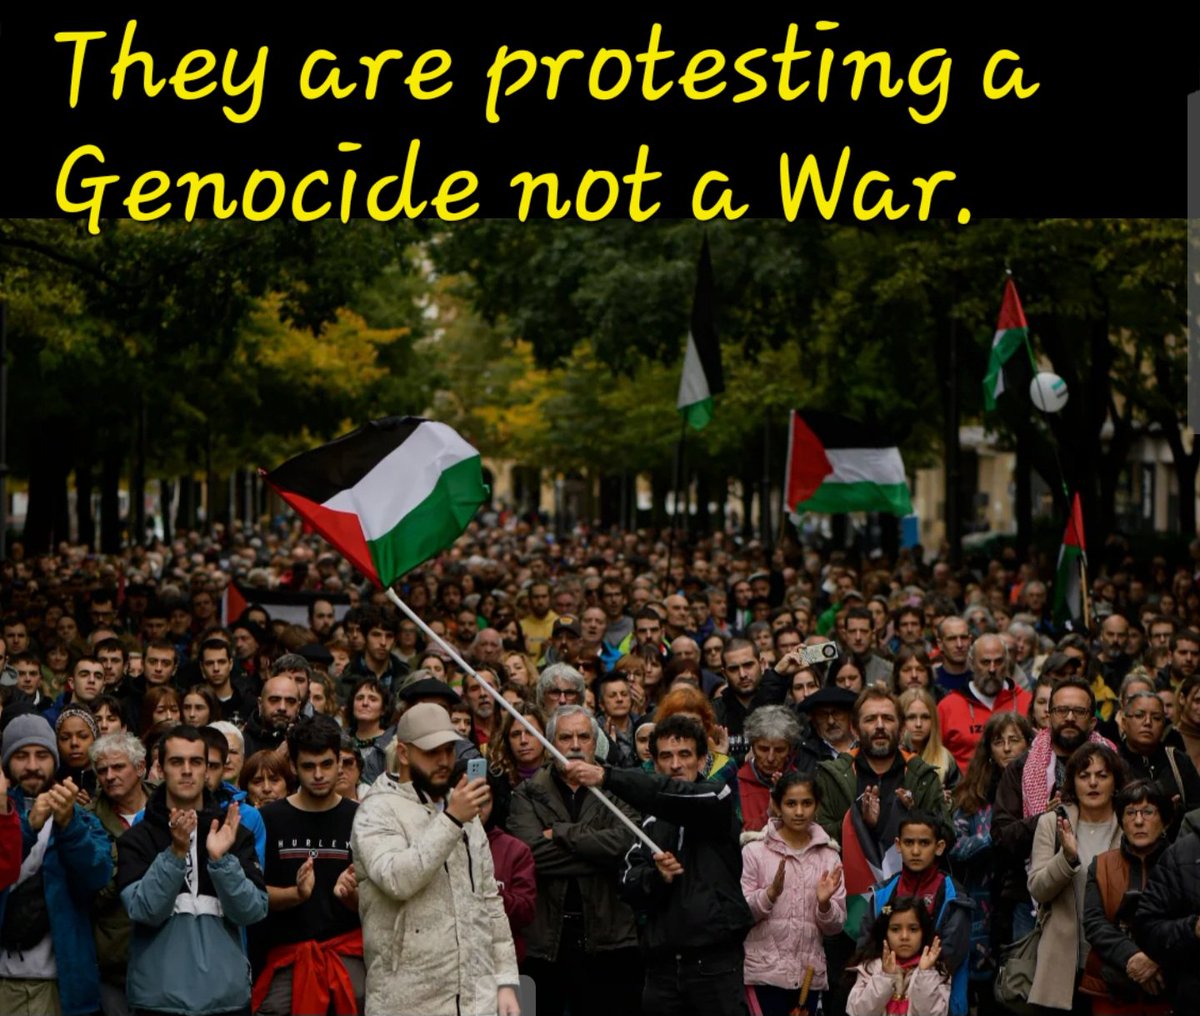 @BirzeitU #FreePalestine 
#protestforPalestine